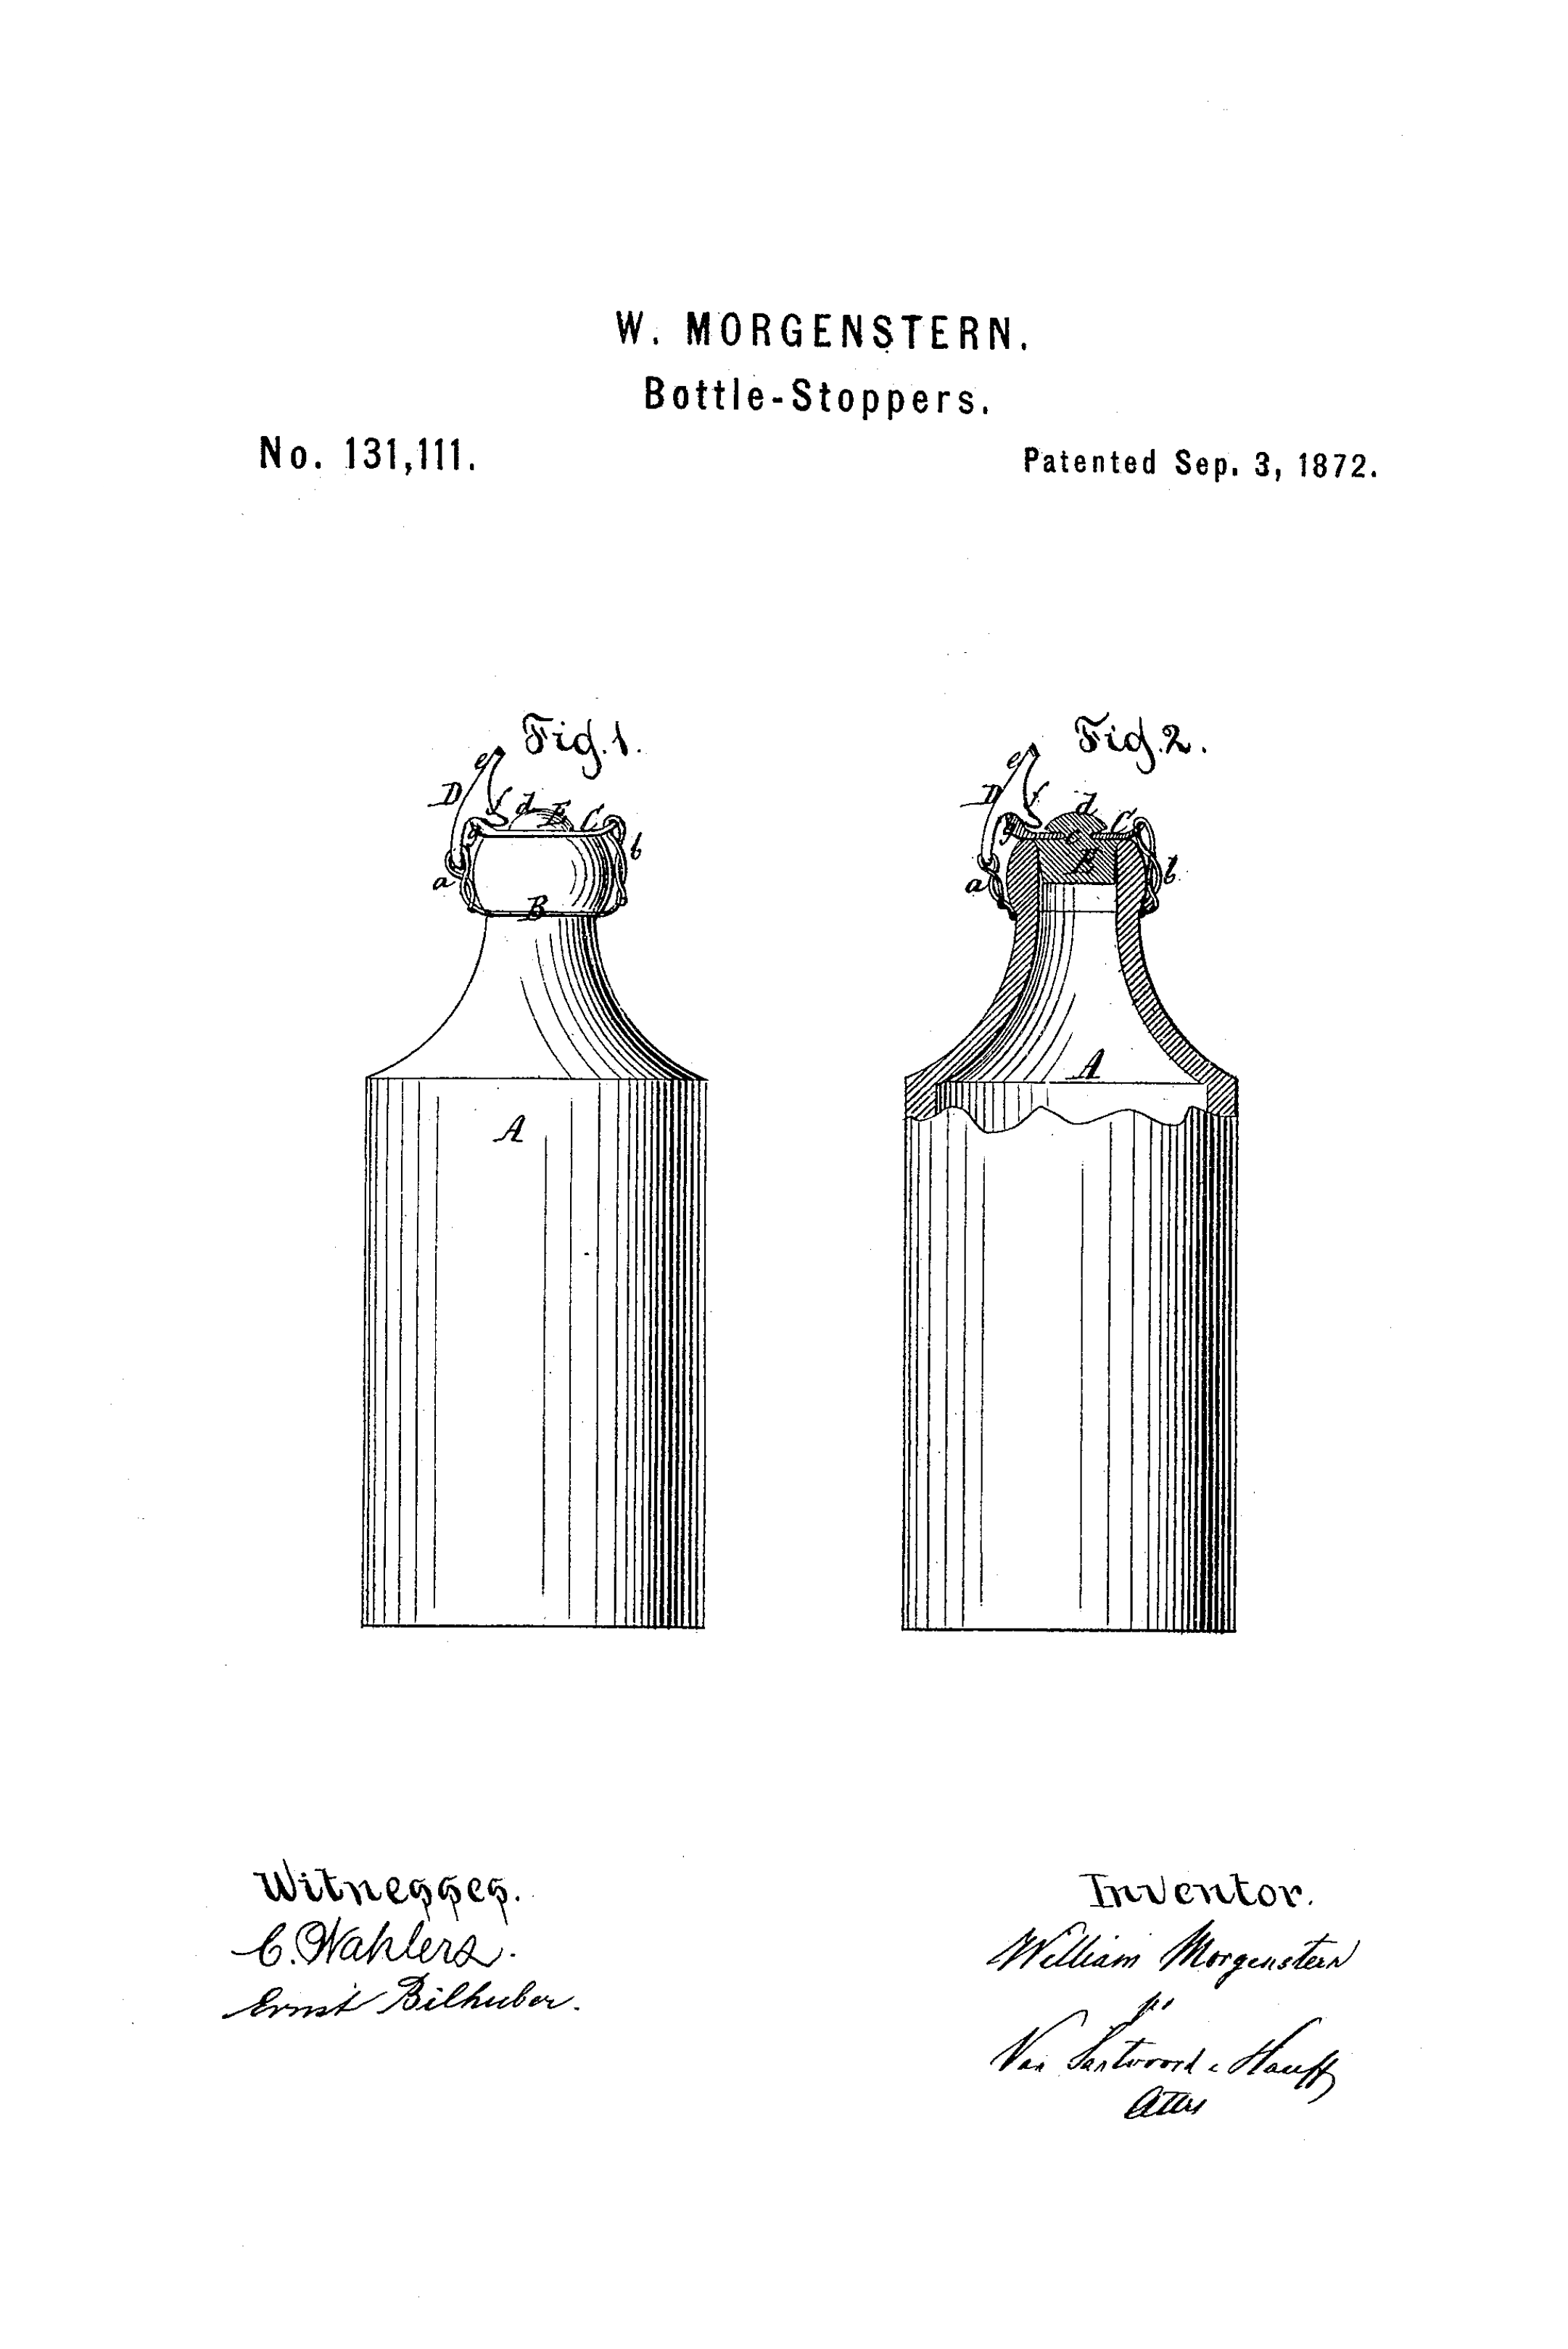 Patent 131,111